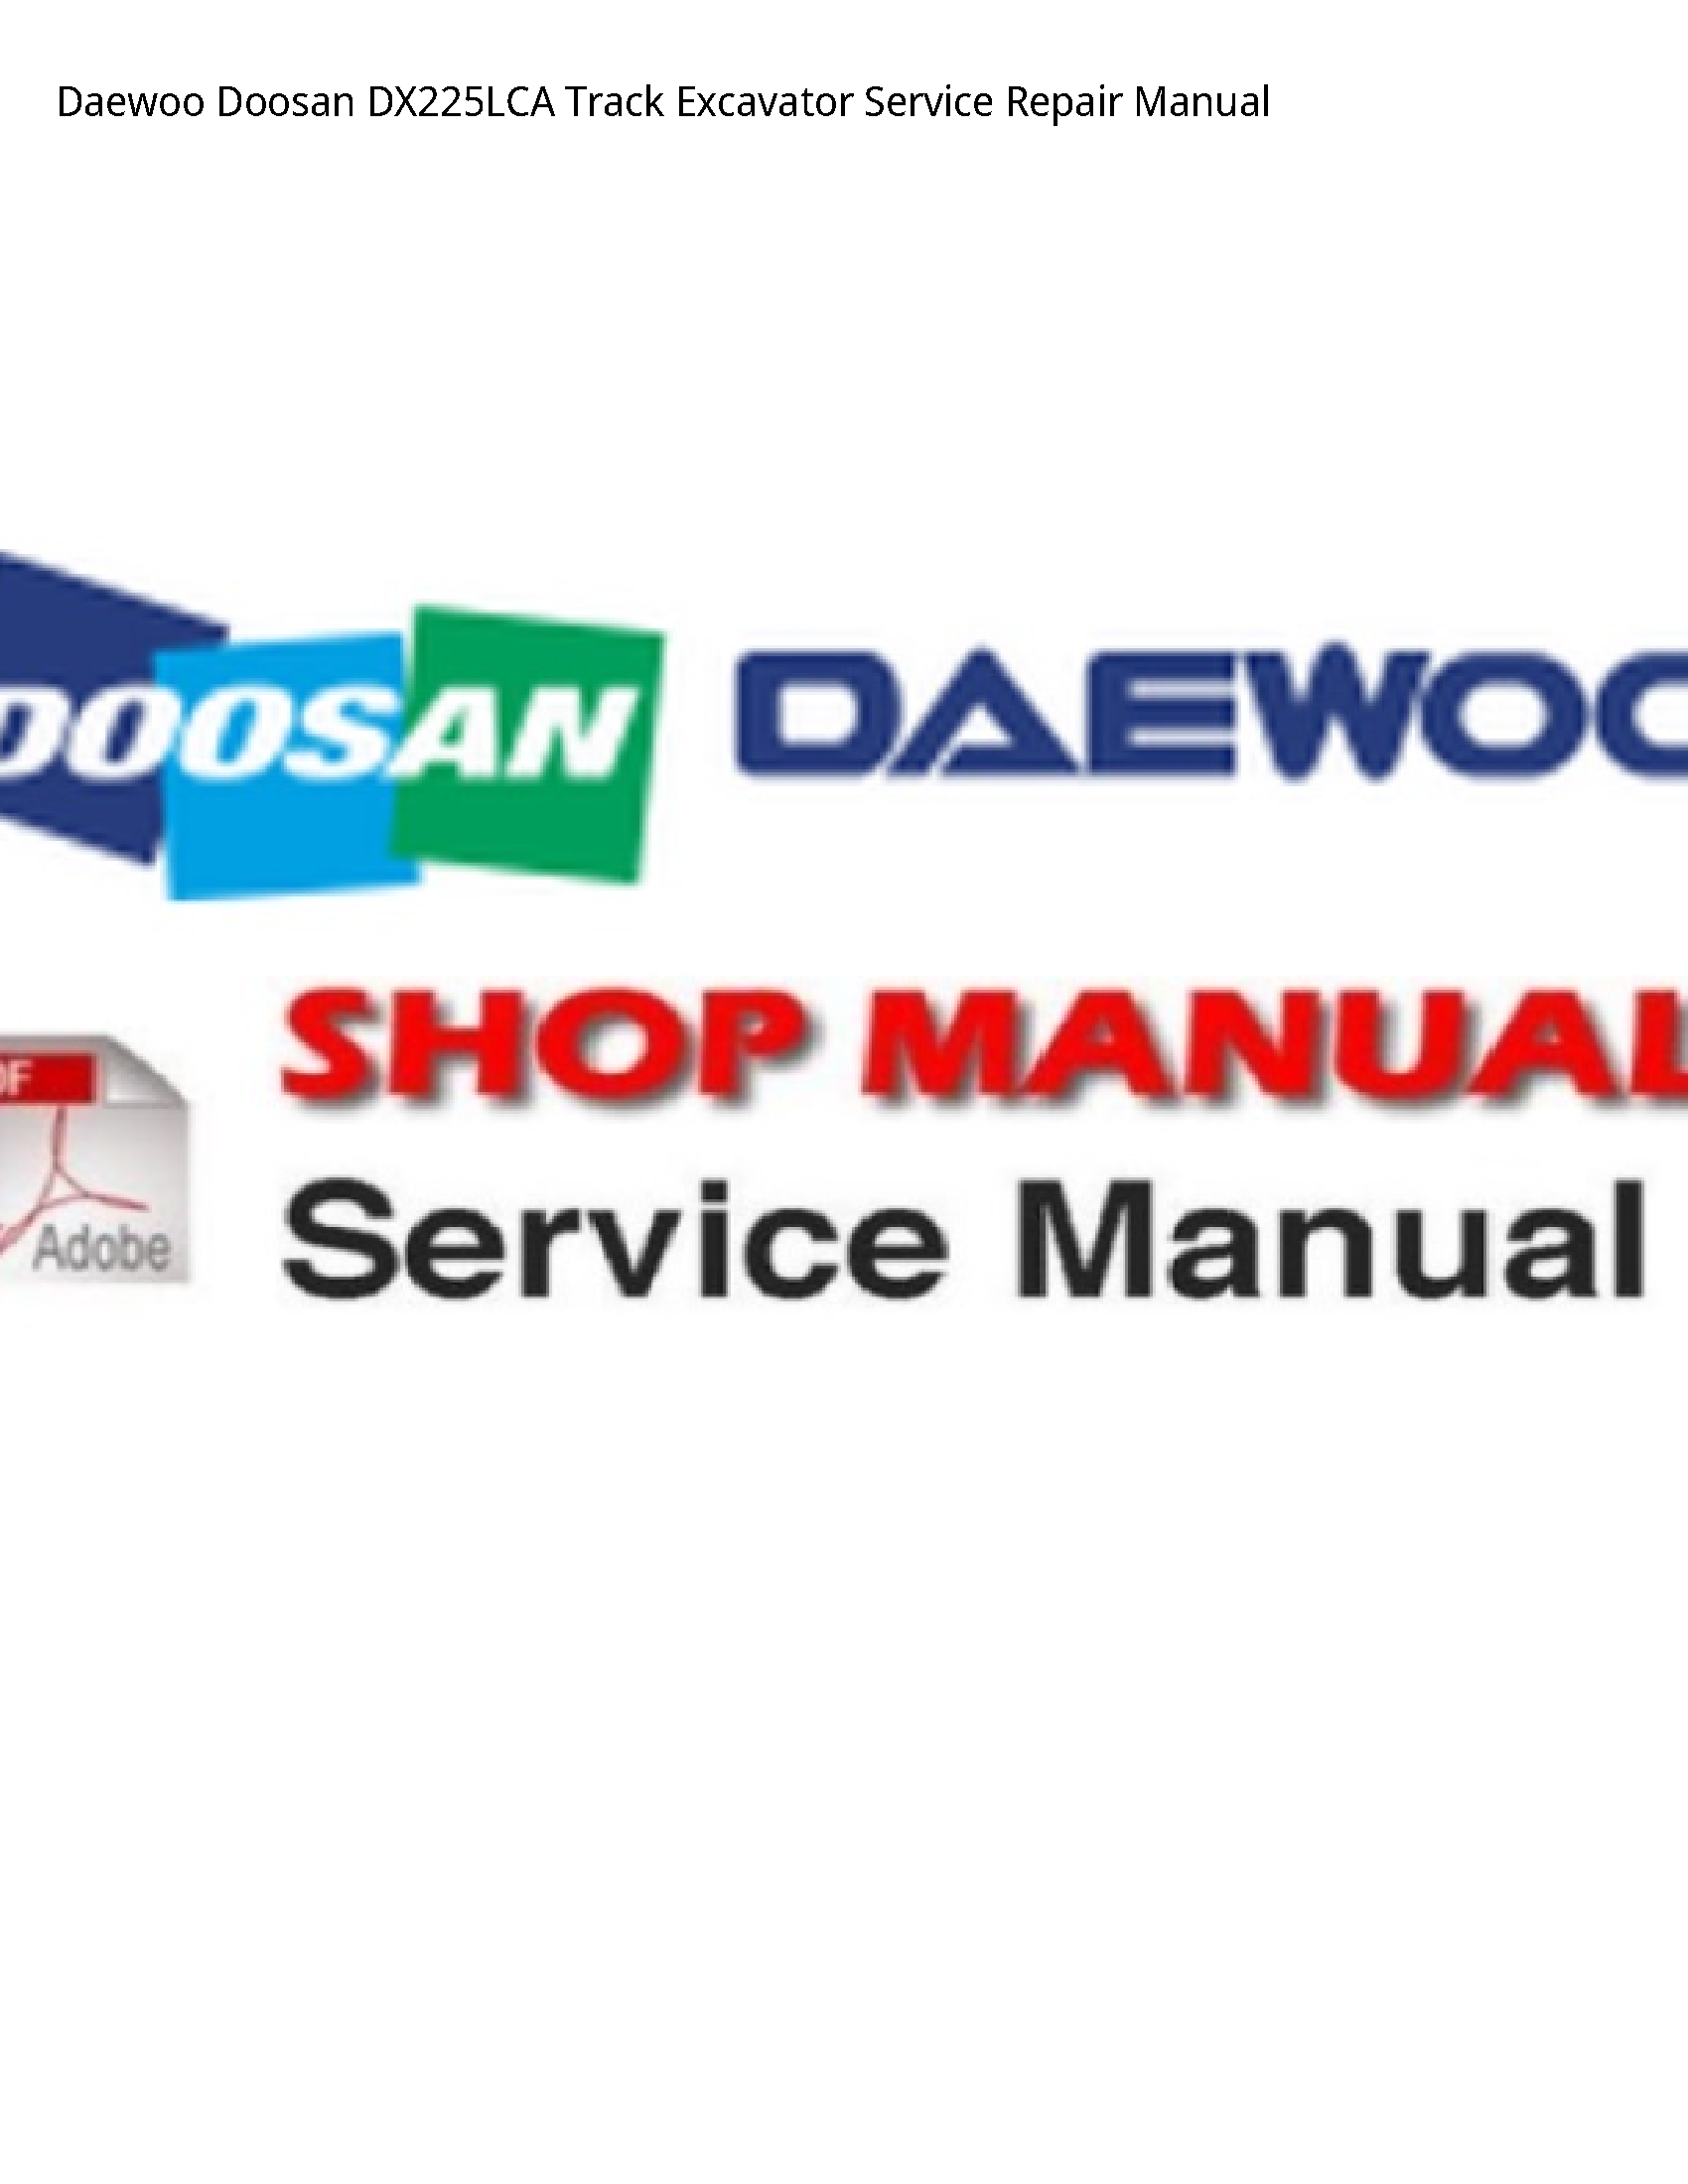 Daewoo Doosan DX225LCA Track Excavator manual